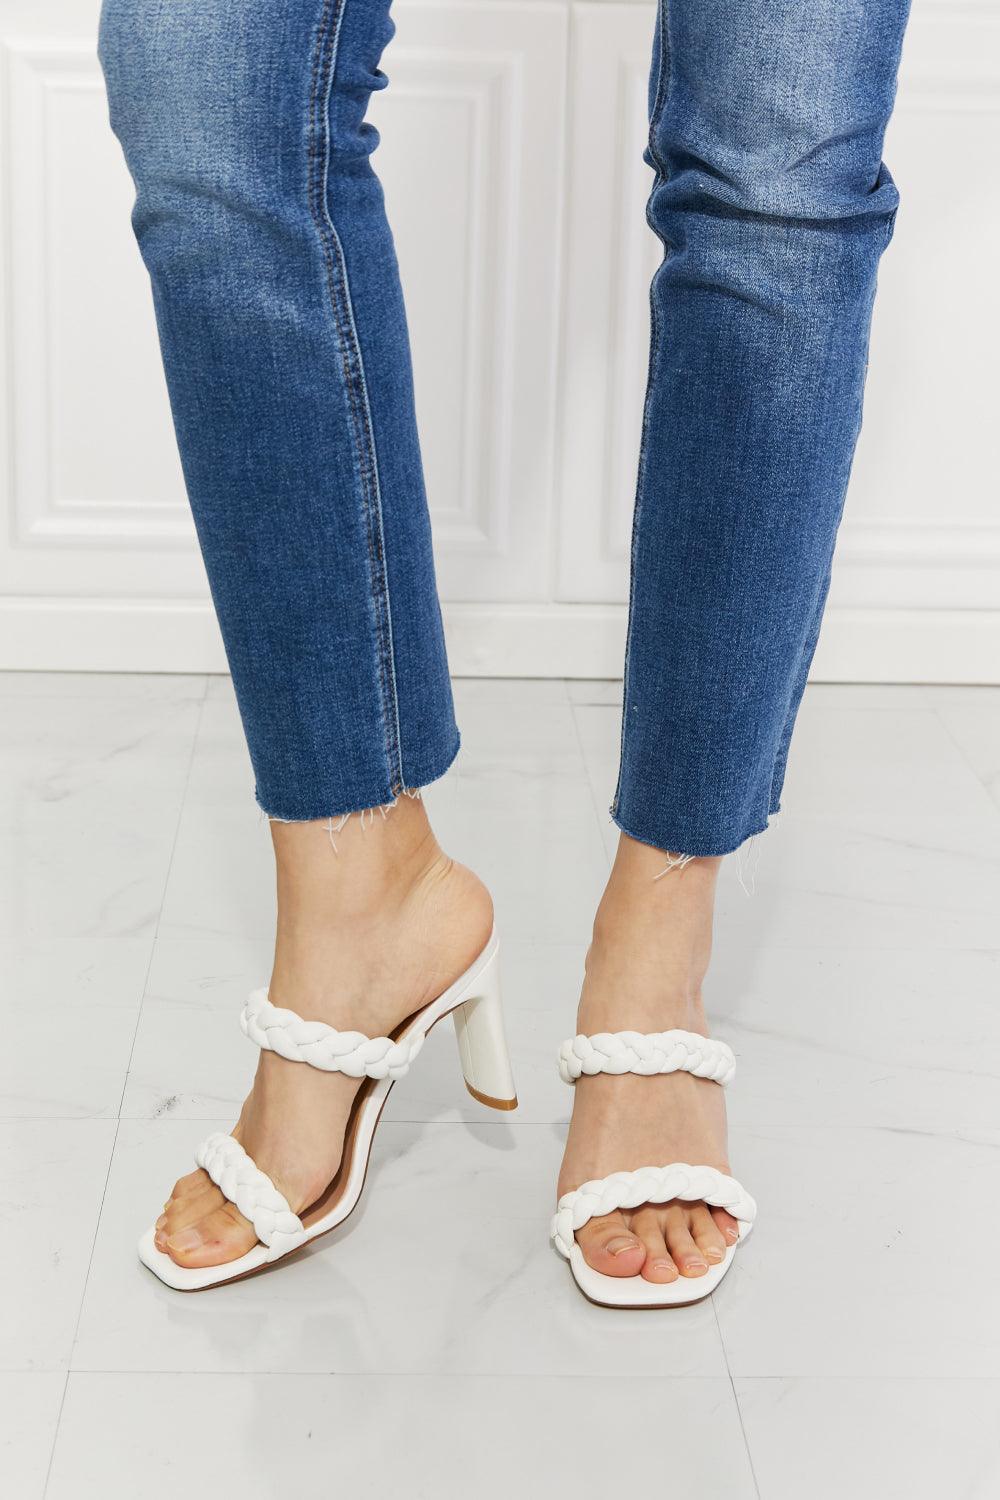 MMShoes Double Braided White Block Heel Sandals - MXSTUDIO.COM